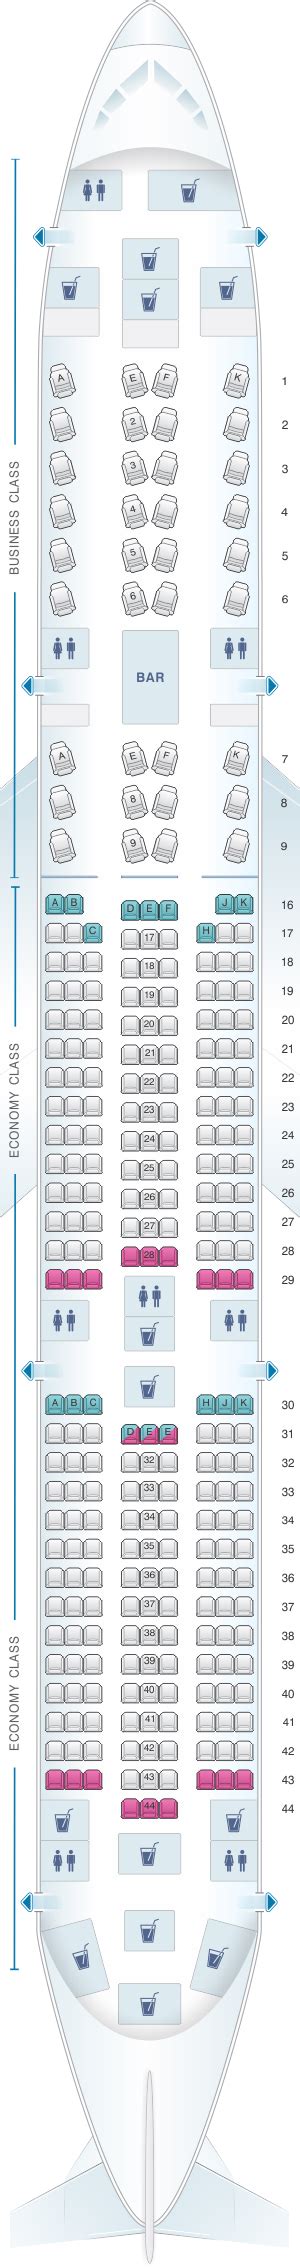 Seating Plan For Qatar 787 Dreamliner